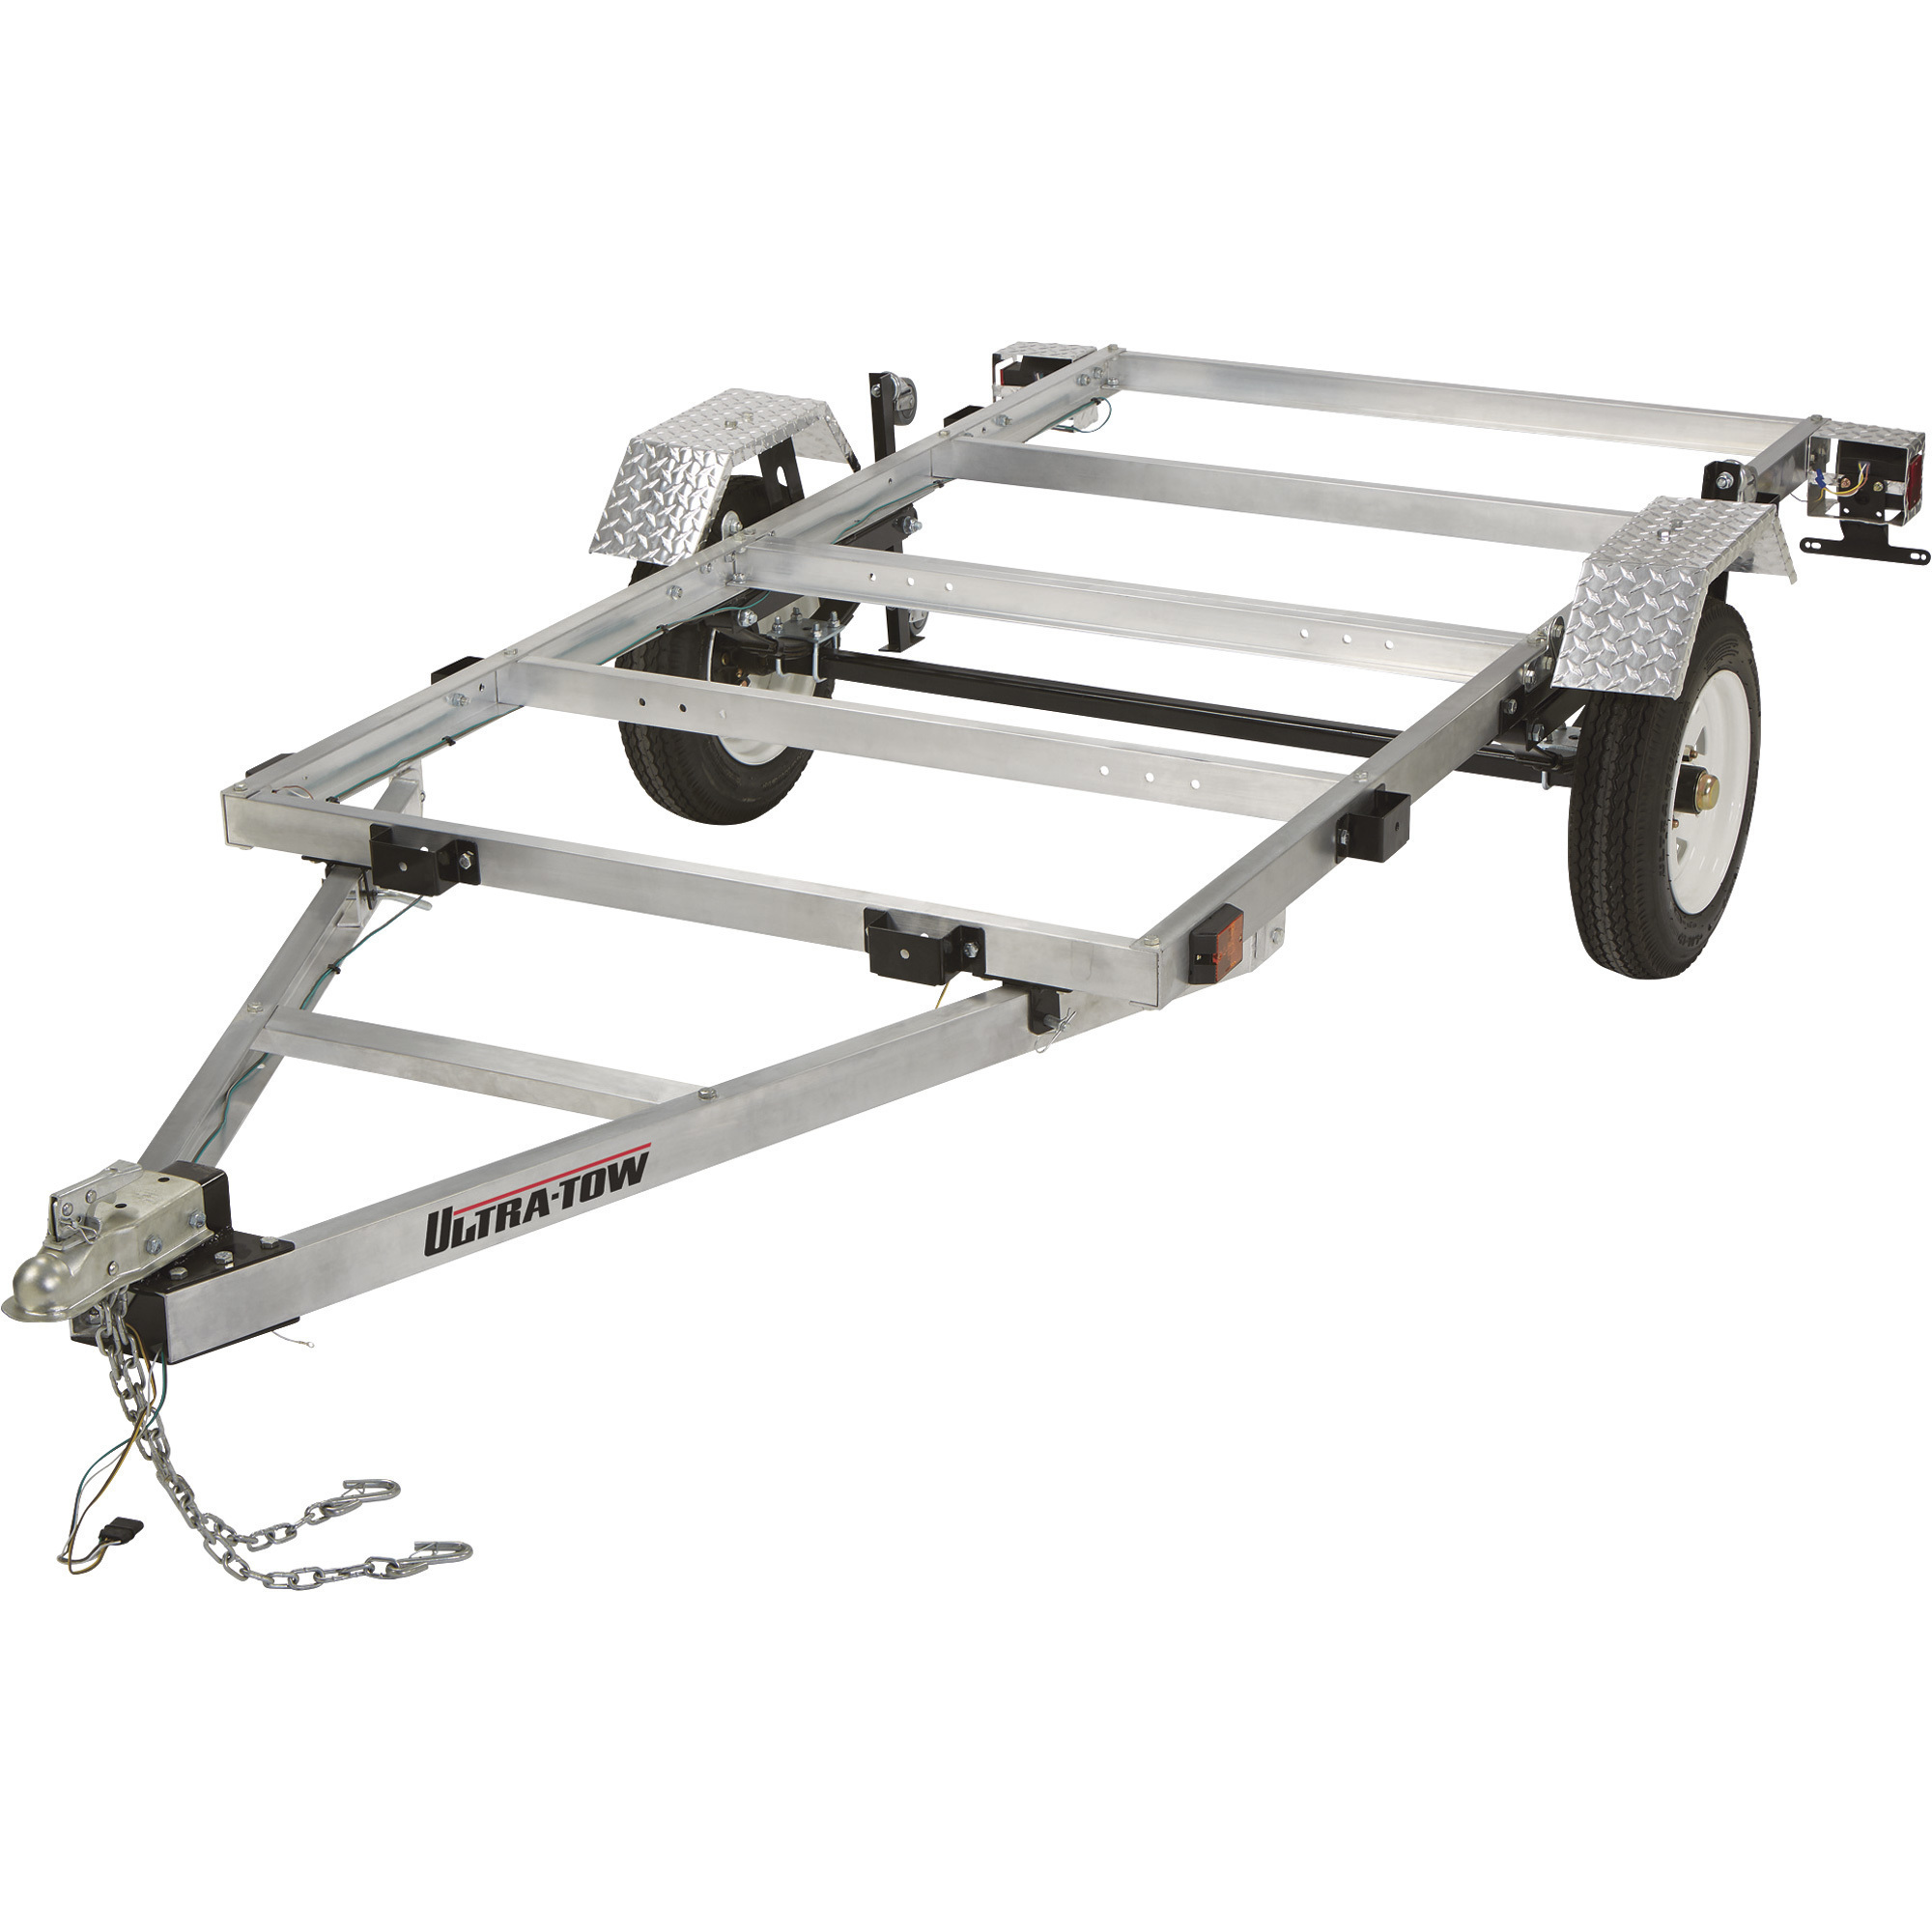 Ultra-Tow 4ft. x 8ft. Folding Aluminum Utility Trailer Kit, 1170-Lb. Load  Capacity